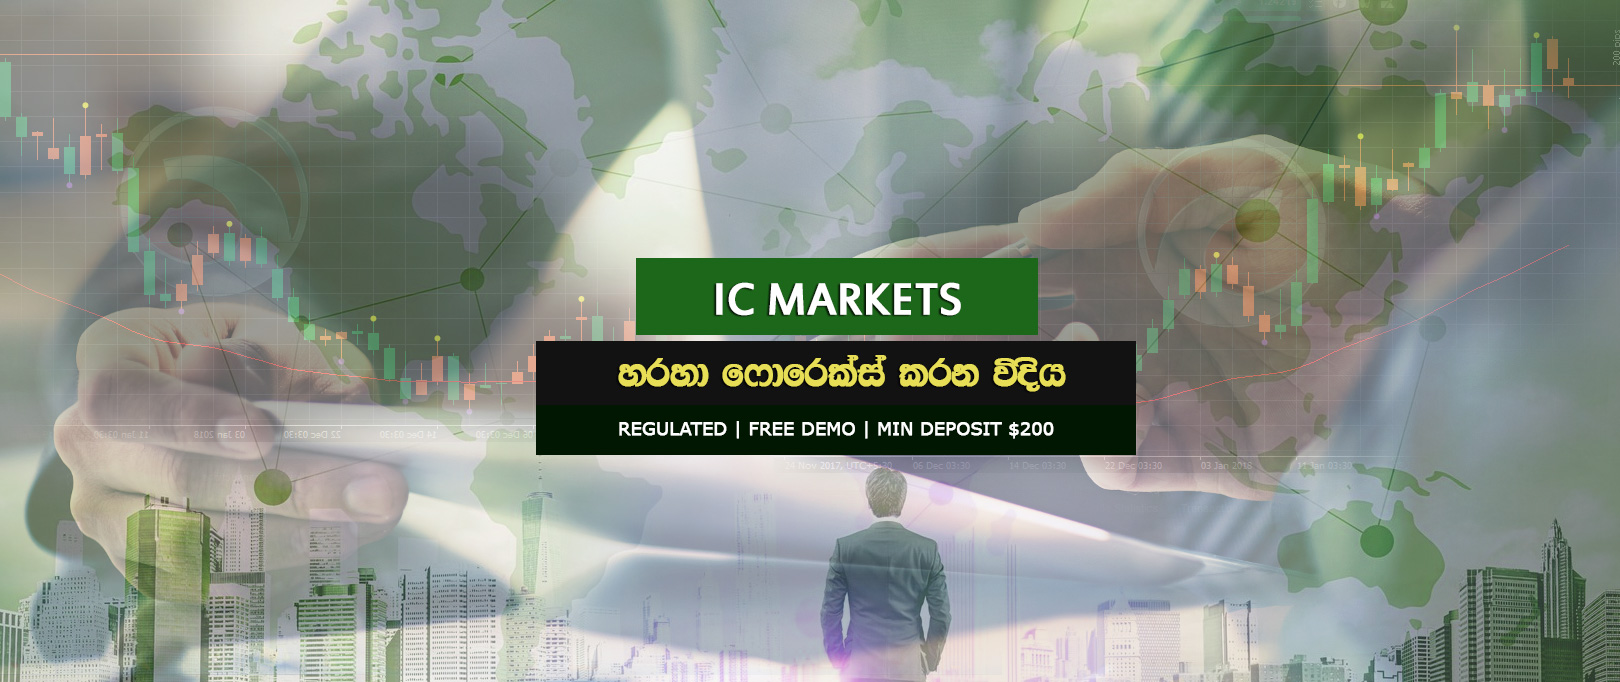 icmarkets forex tutorial in Sinhala Sri Lanka by Prathilaba